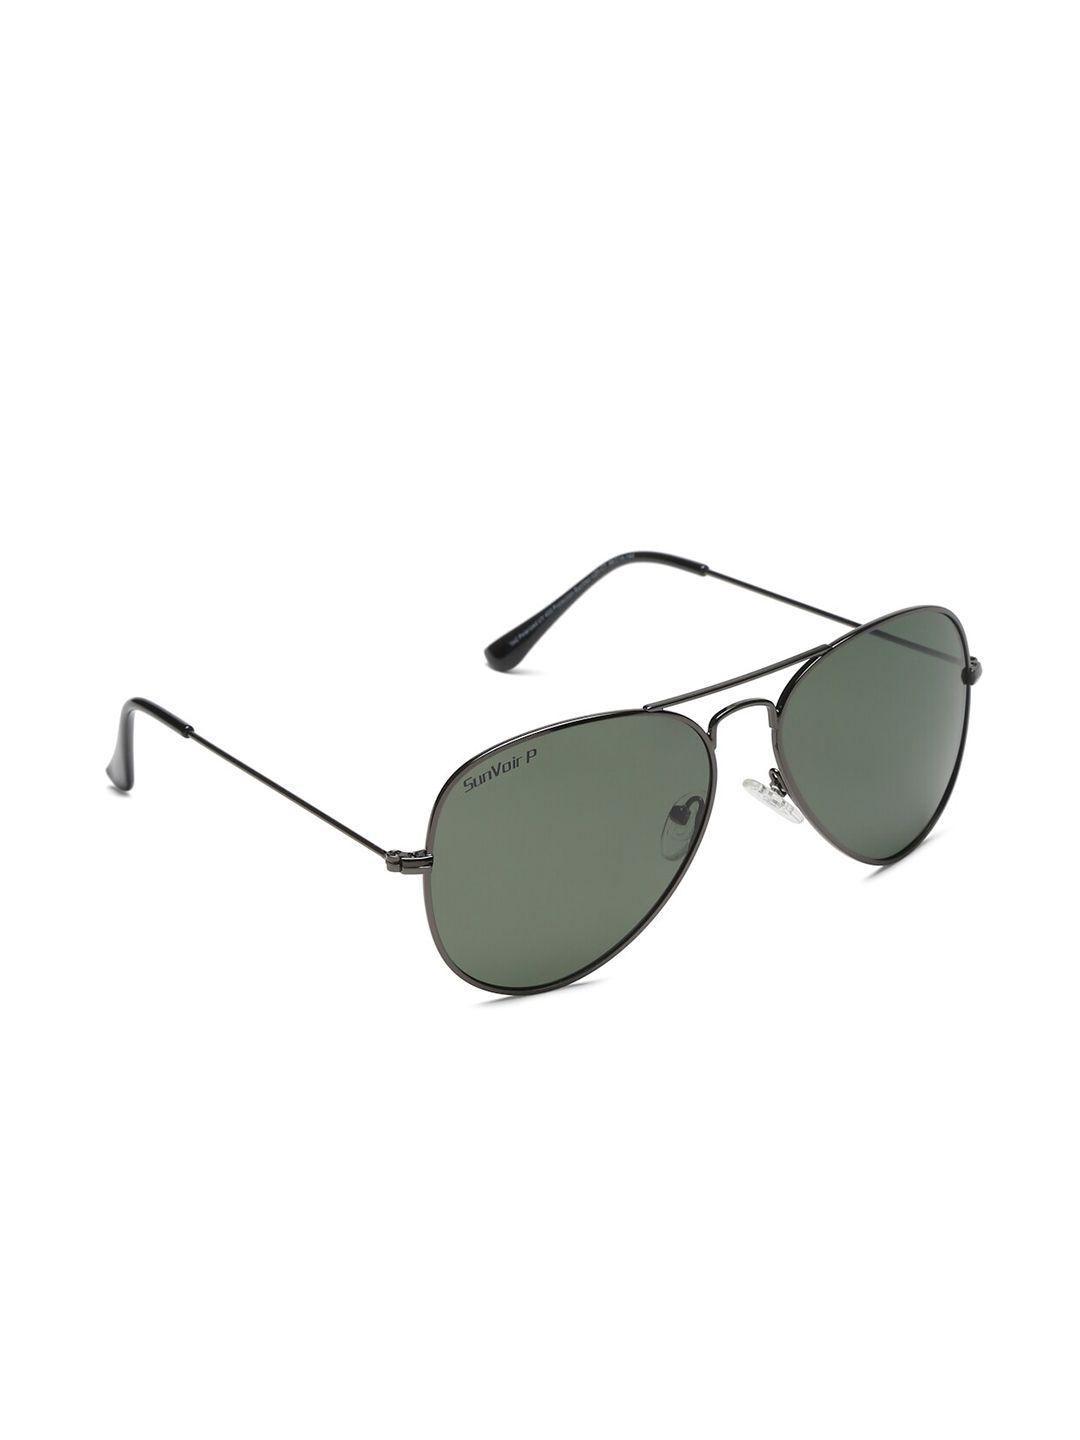 sunvoir unisex green lens & gunmetal-toned aviator sunglasses with polarised lens